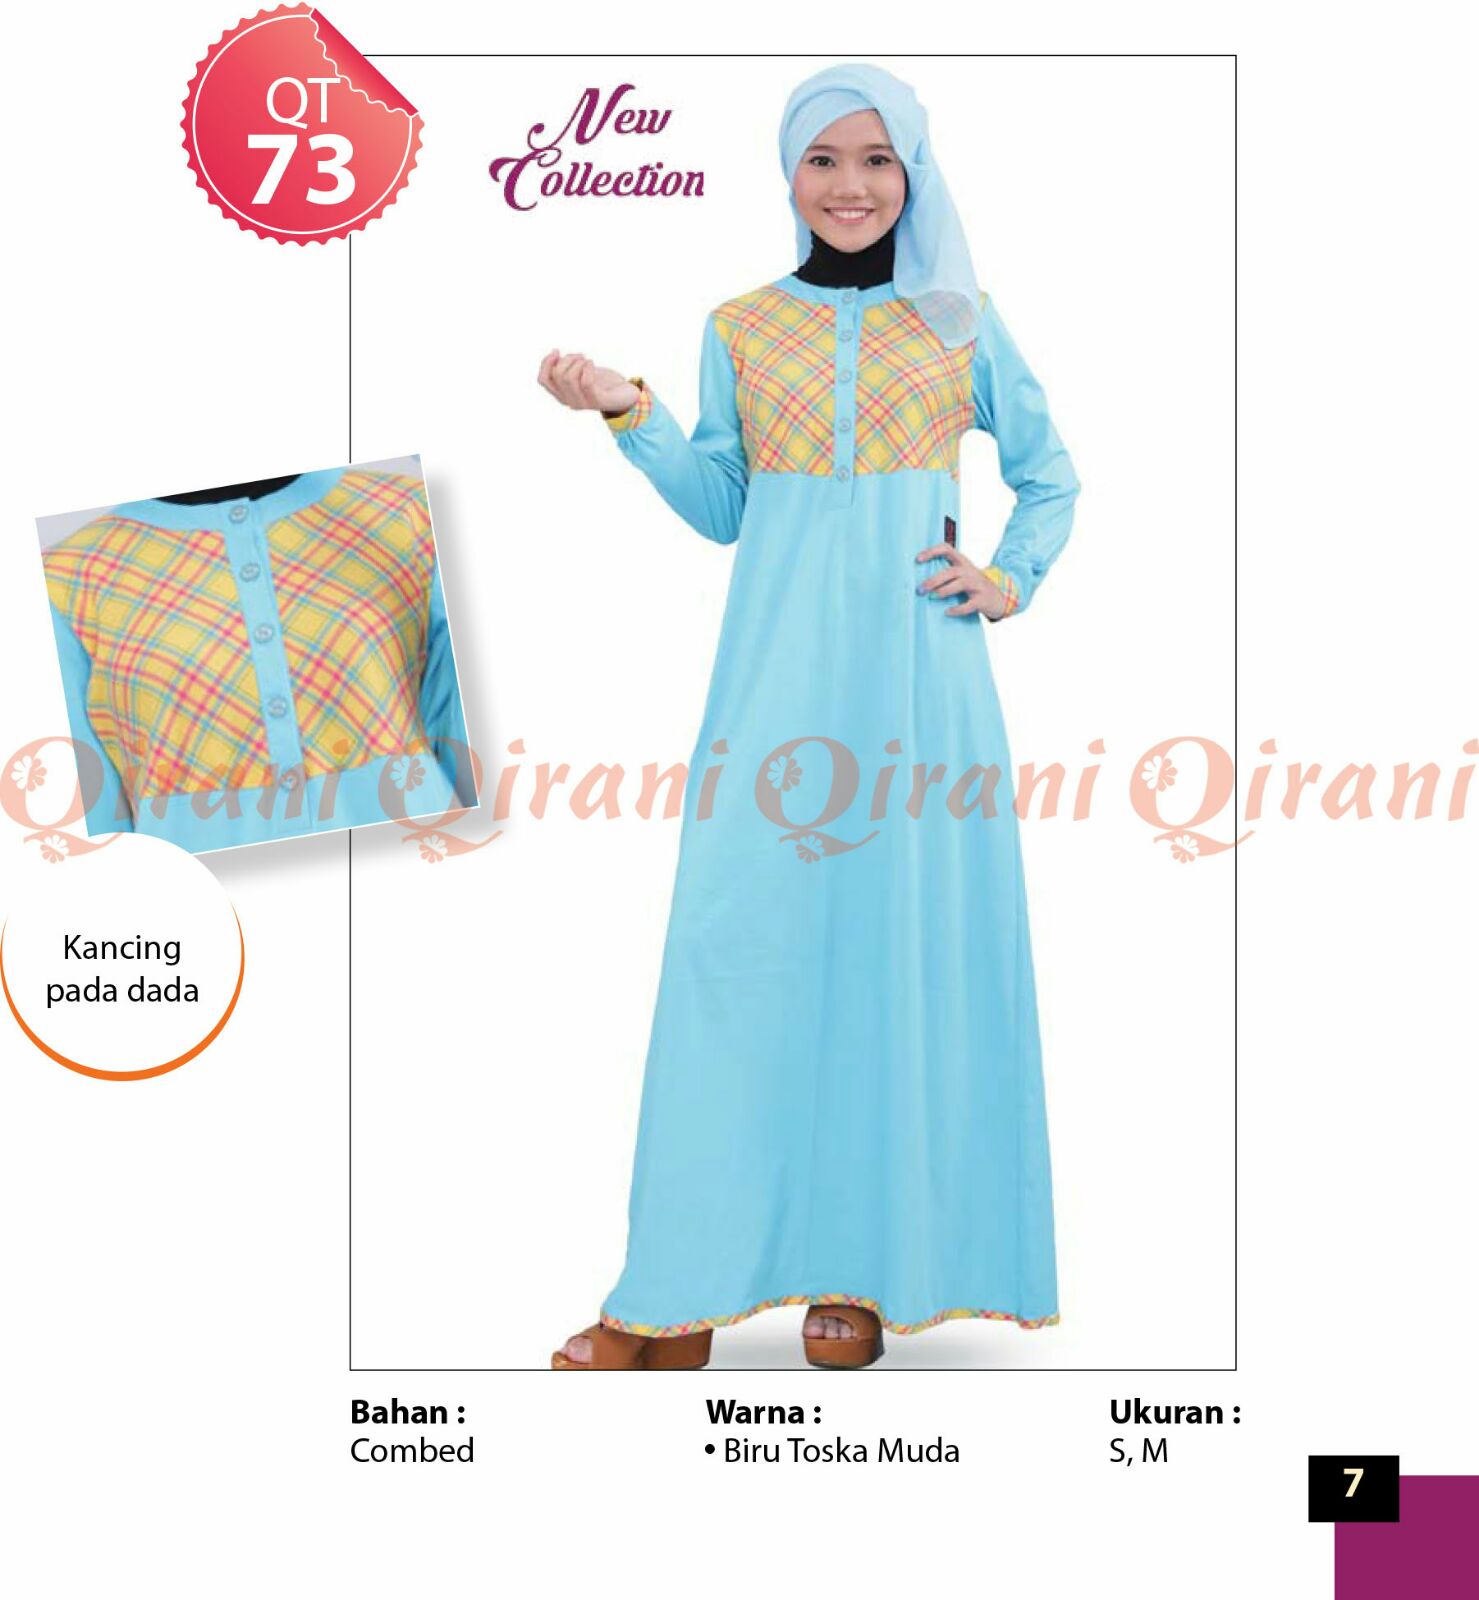 Koleksi Busana Muslimah Baju Couple Muslim Baju Muslim Qirani 2016